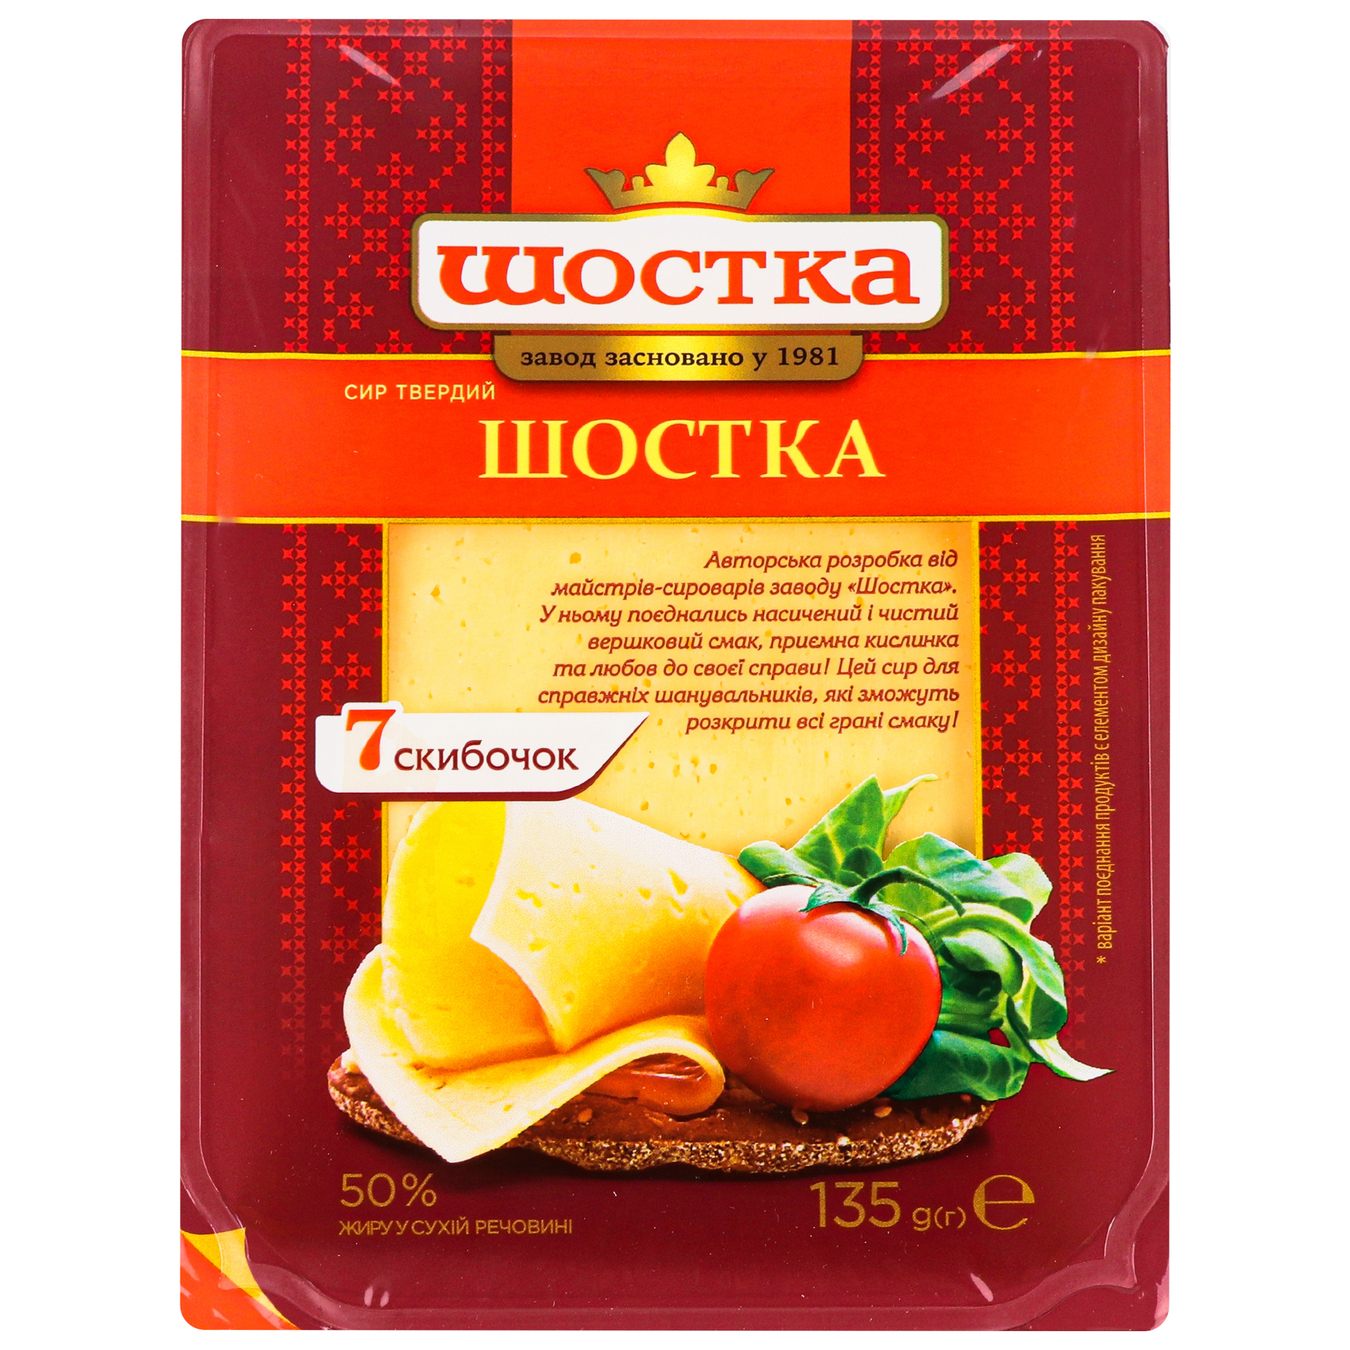 Shostka hard cheese Slices 50% 135g